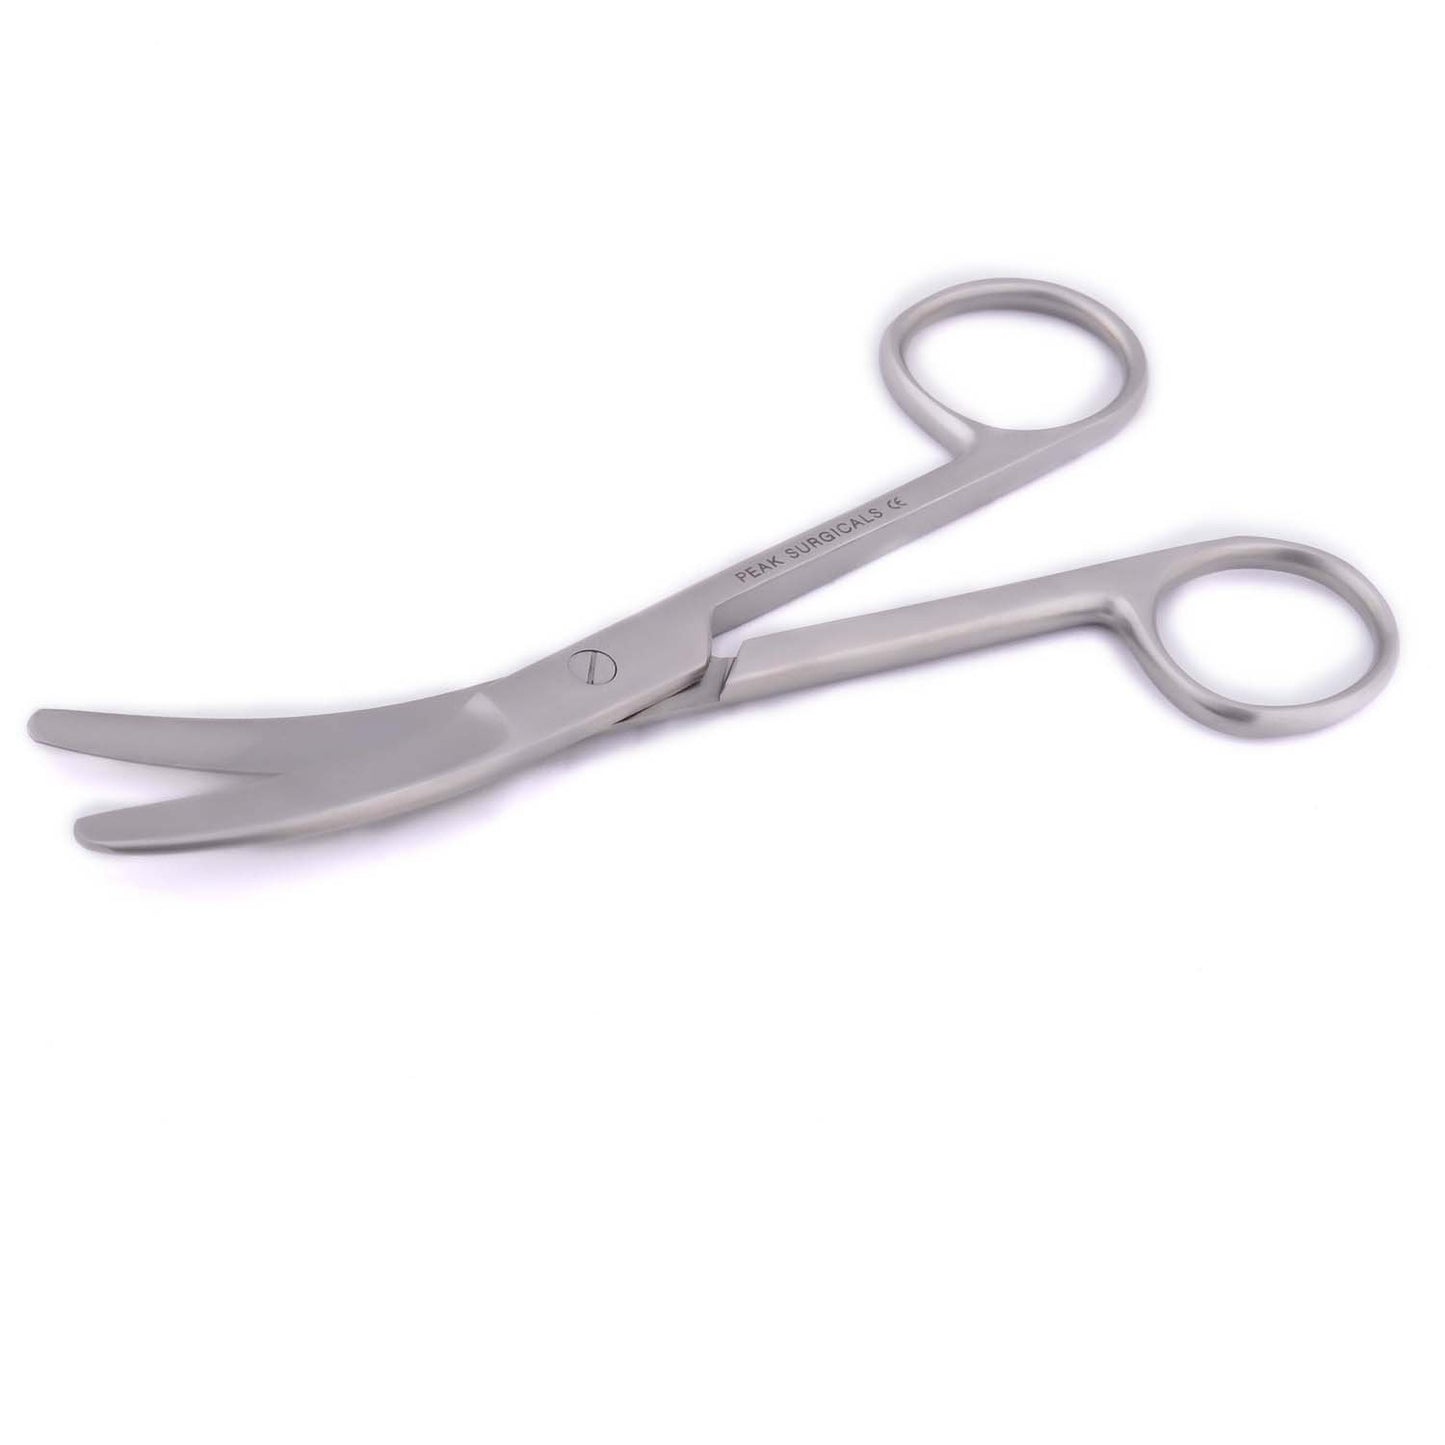 Operating Scissors Curved